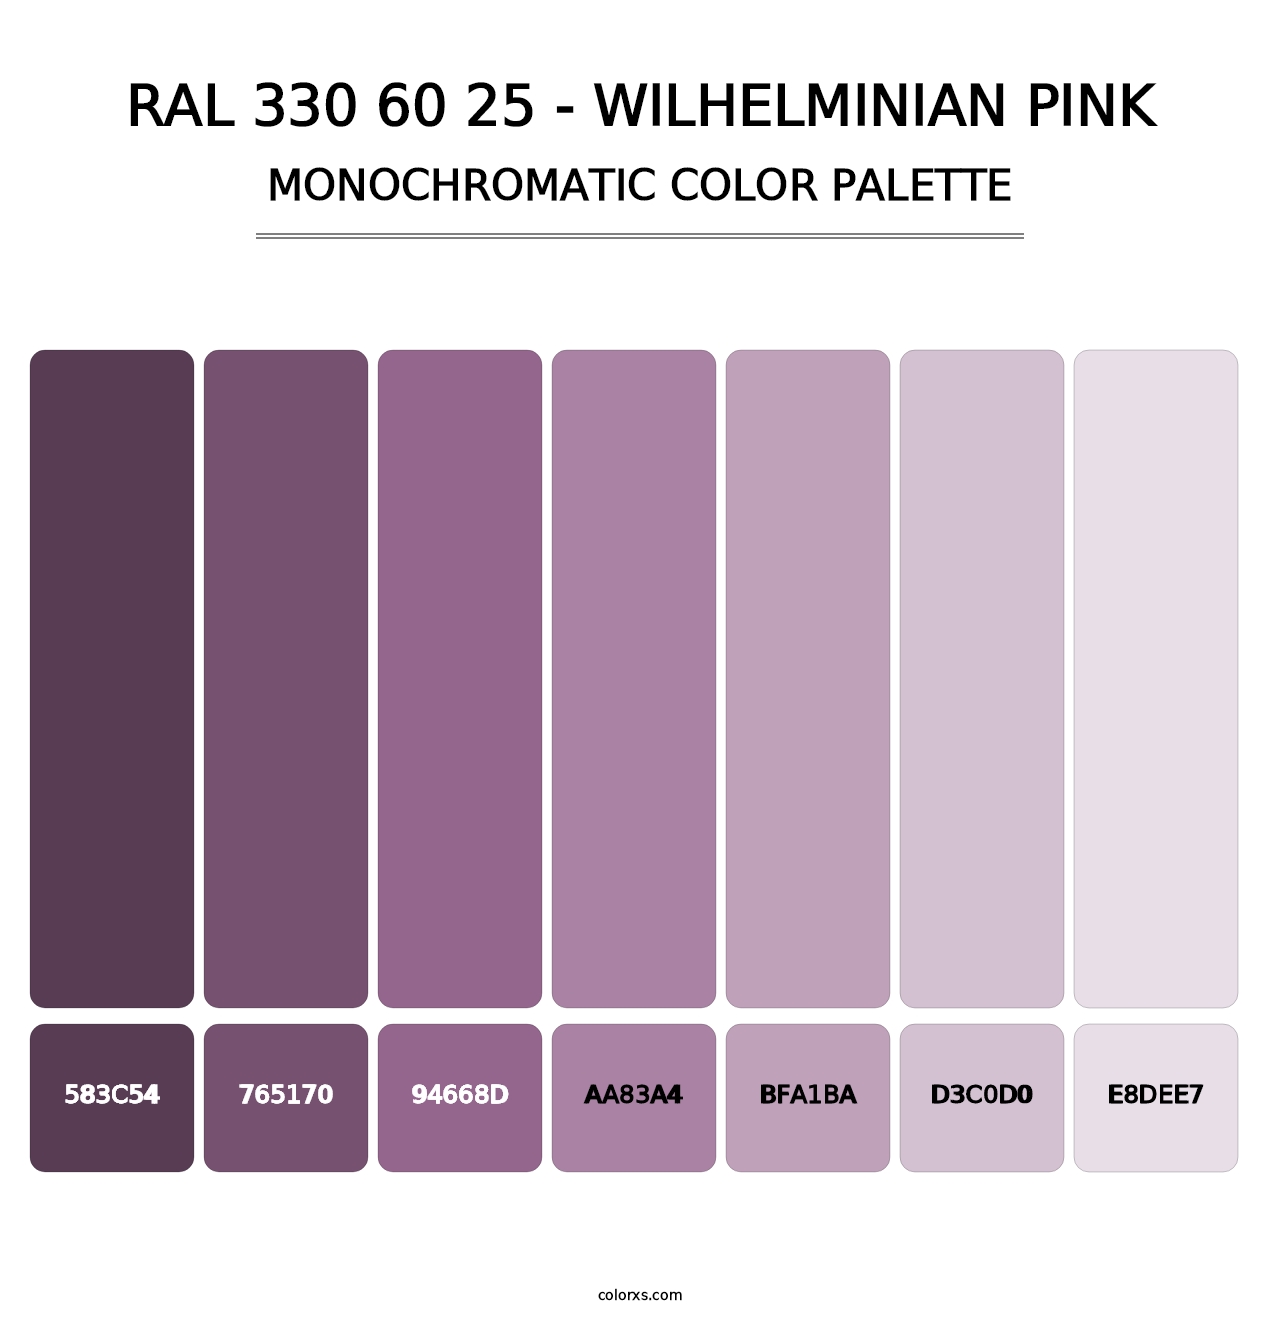 RAL 330 60 25 - Wilhelminian Pink - Monochromatic Color Palette